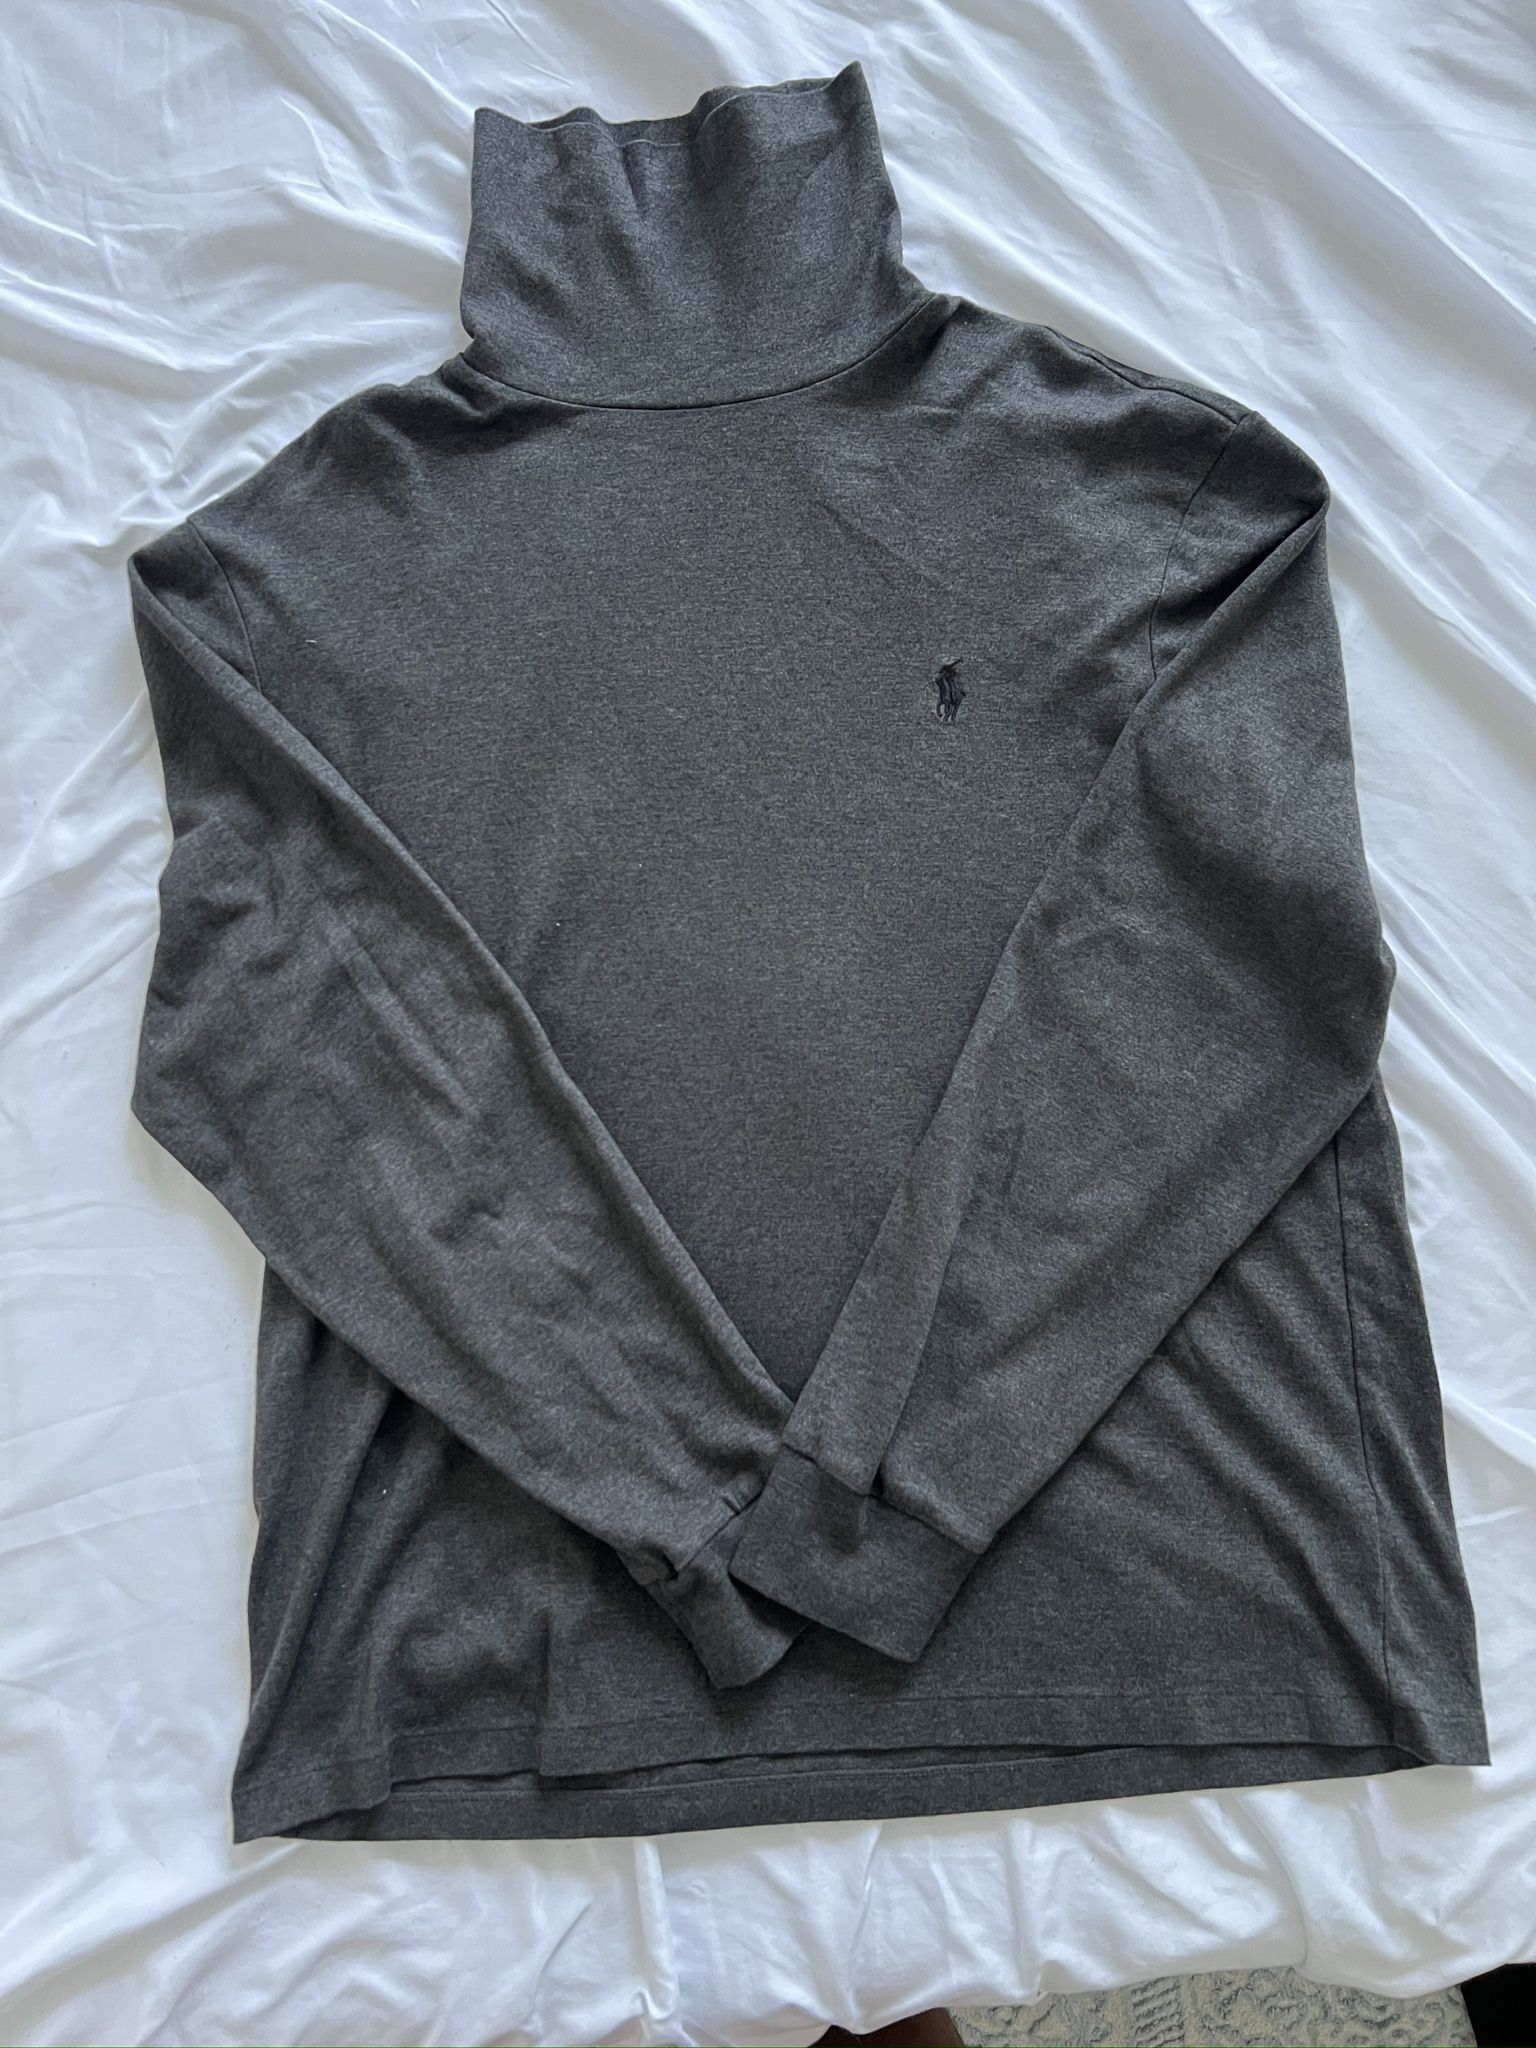 Polo Ralph Lauren Long Sleeve gray turtleneck size Large 